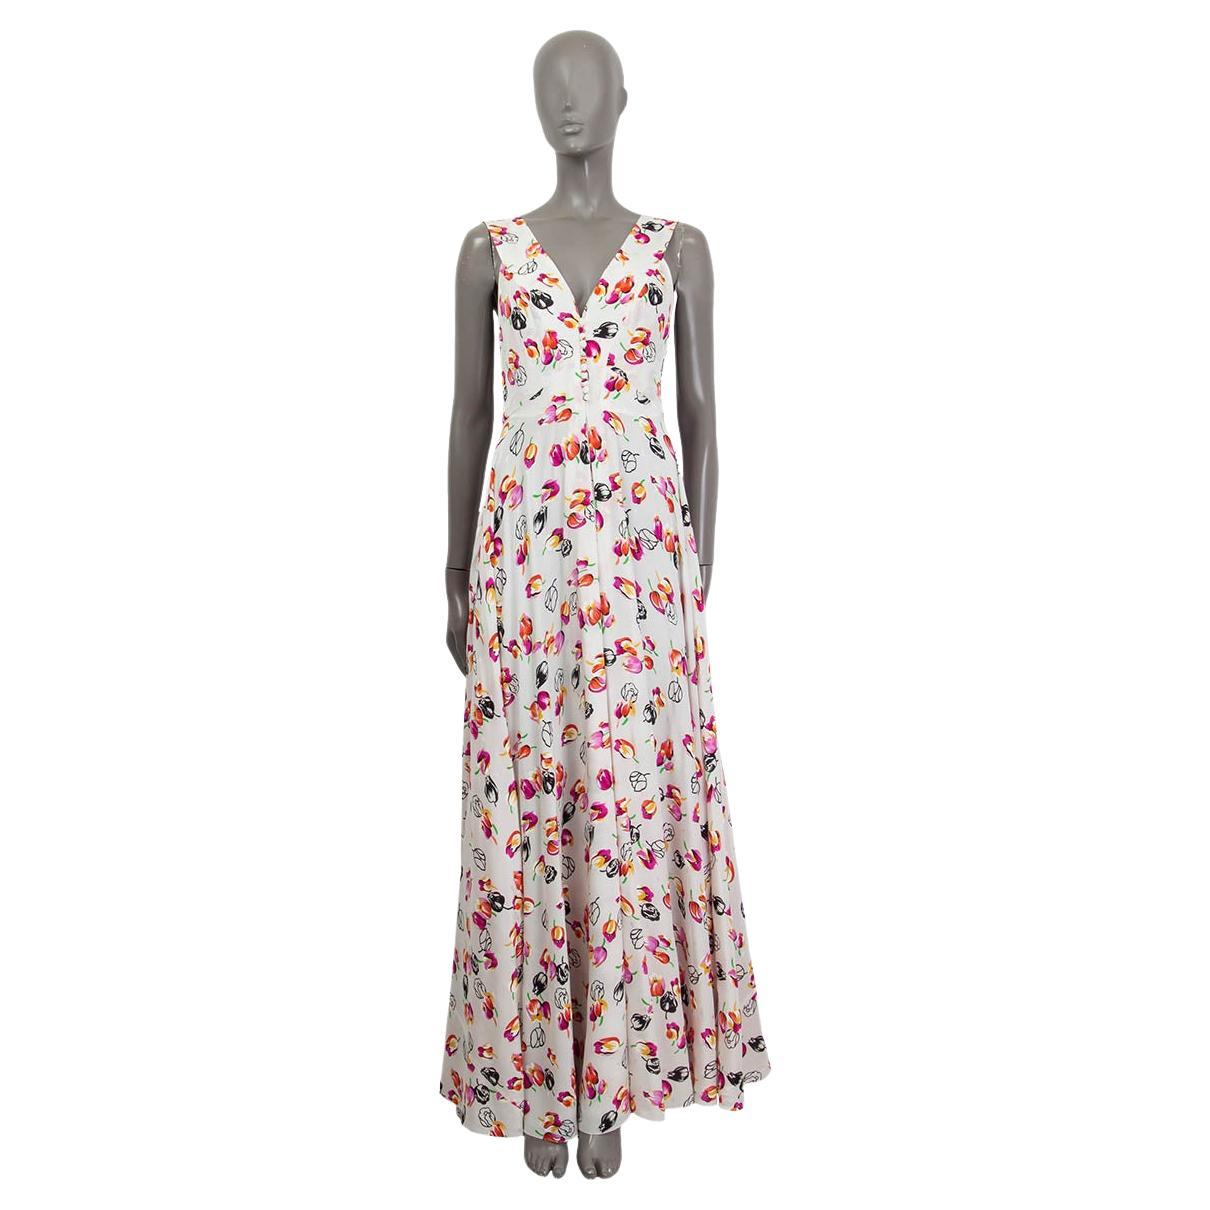 Louis Vuitton Print Dress - 22 For Sale on 1stDibs